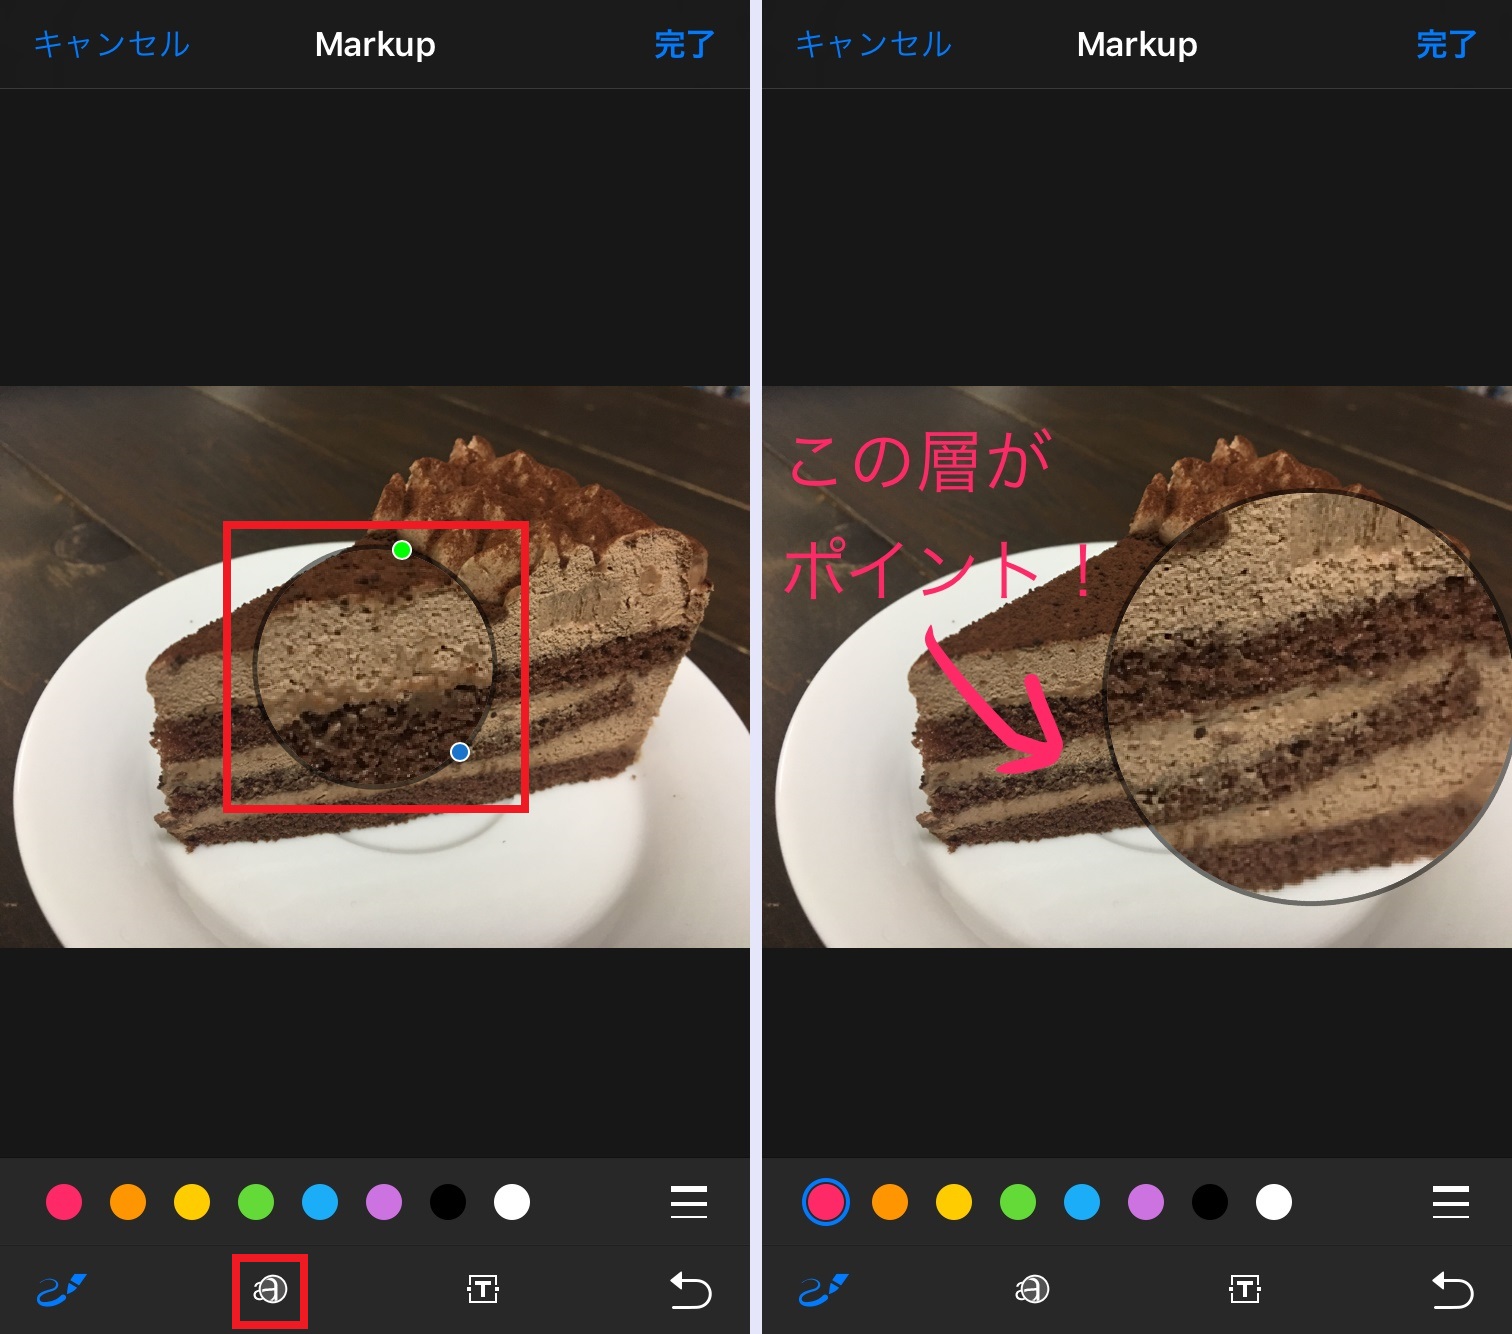 Iphone標準の写真編集機能 Markup ちょっとした加工はこれで十分 Iphone Tips Engadget 日本版